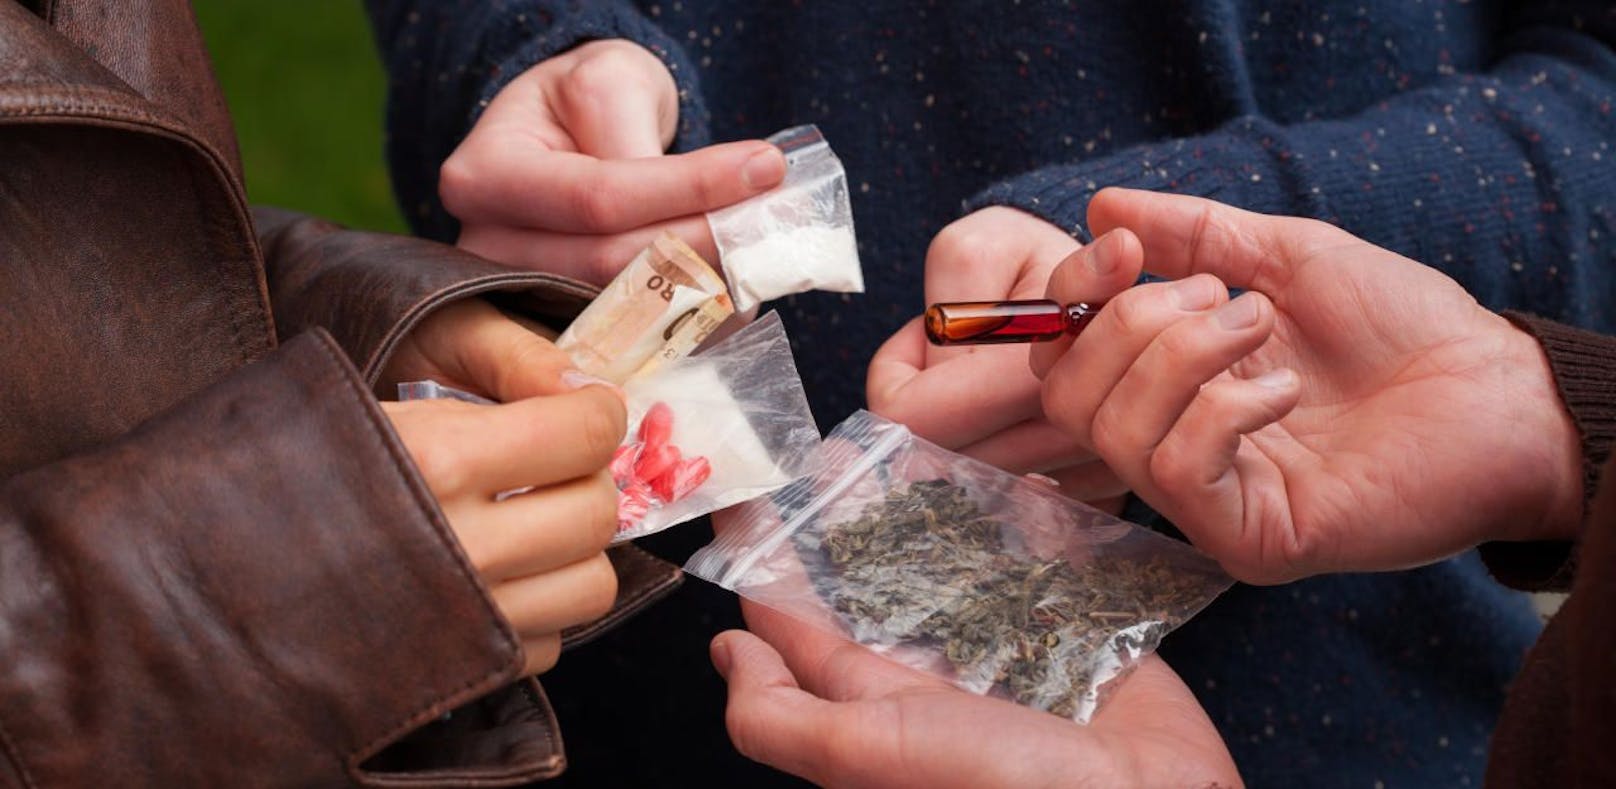 Drug dealer selling pills,marijuana and cocaine